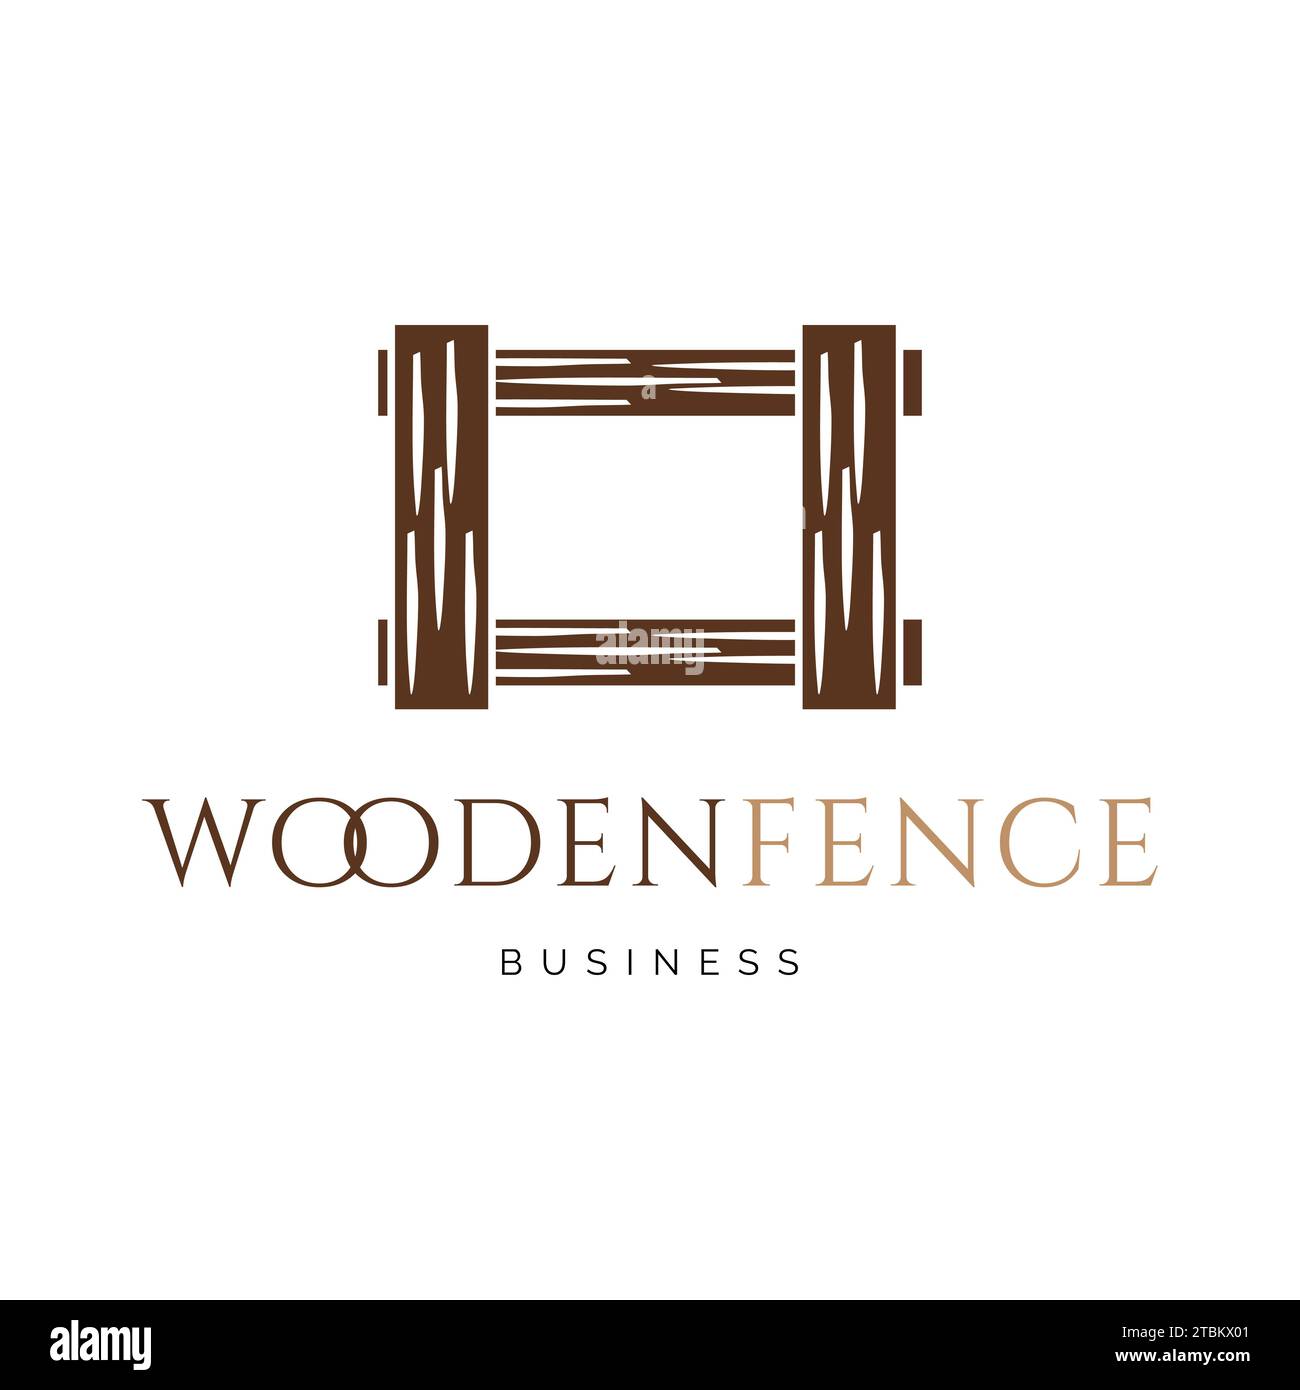 Wooden fence icon logo design inspiration Stock Vector